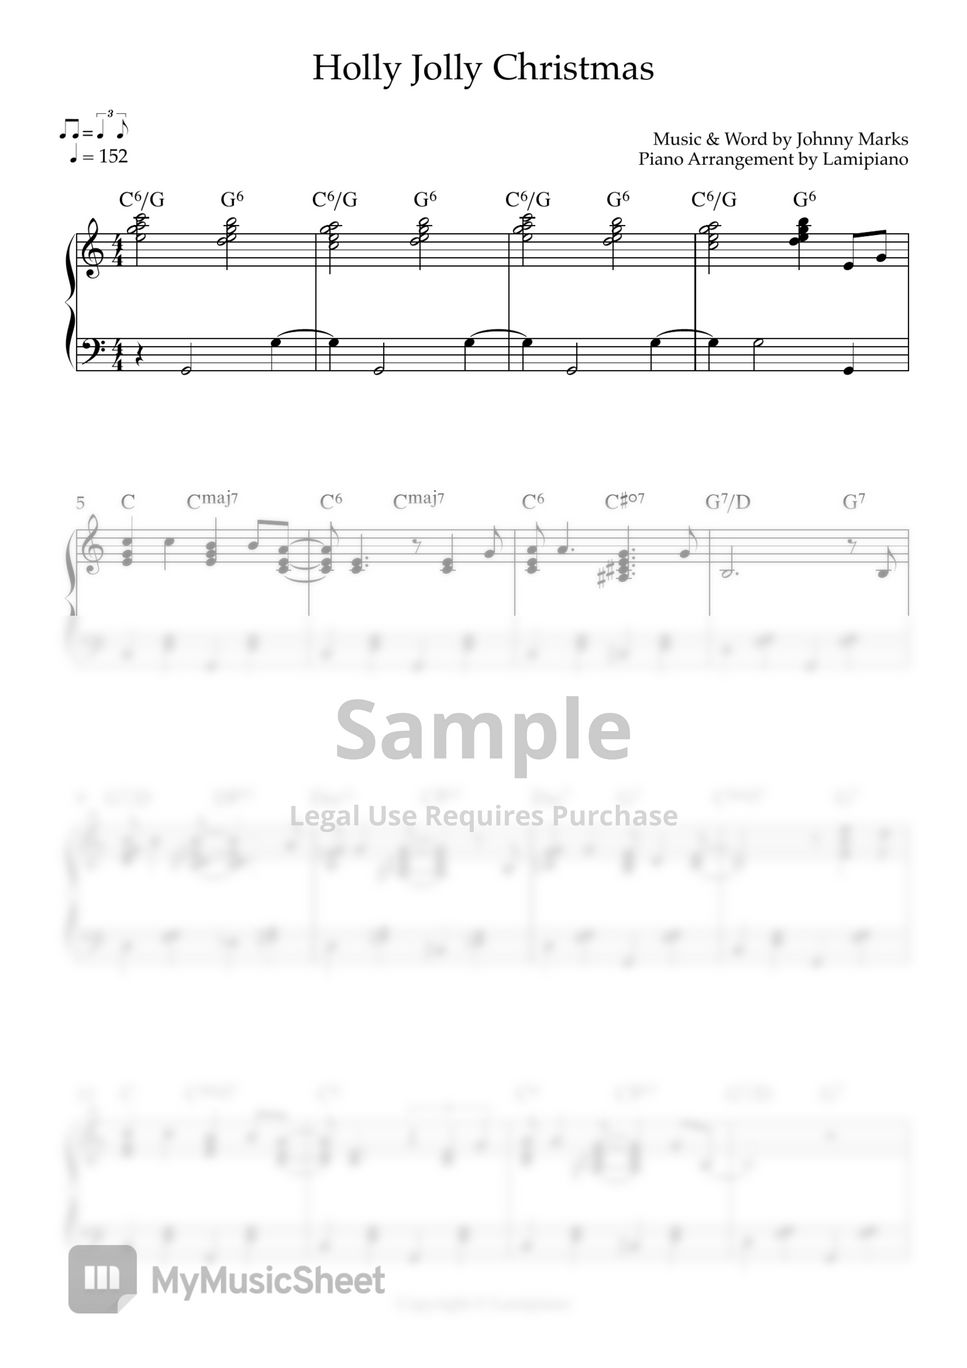 Johnny Marks - Holly Jolly Christmas (Michael Buble / Christmas song/ carol/chords) by Lamipiano